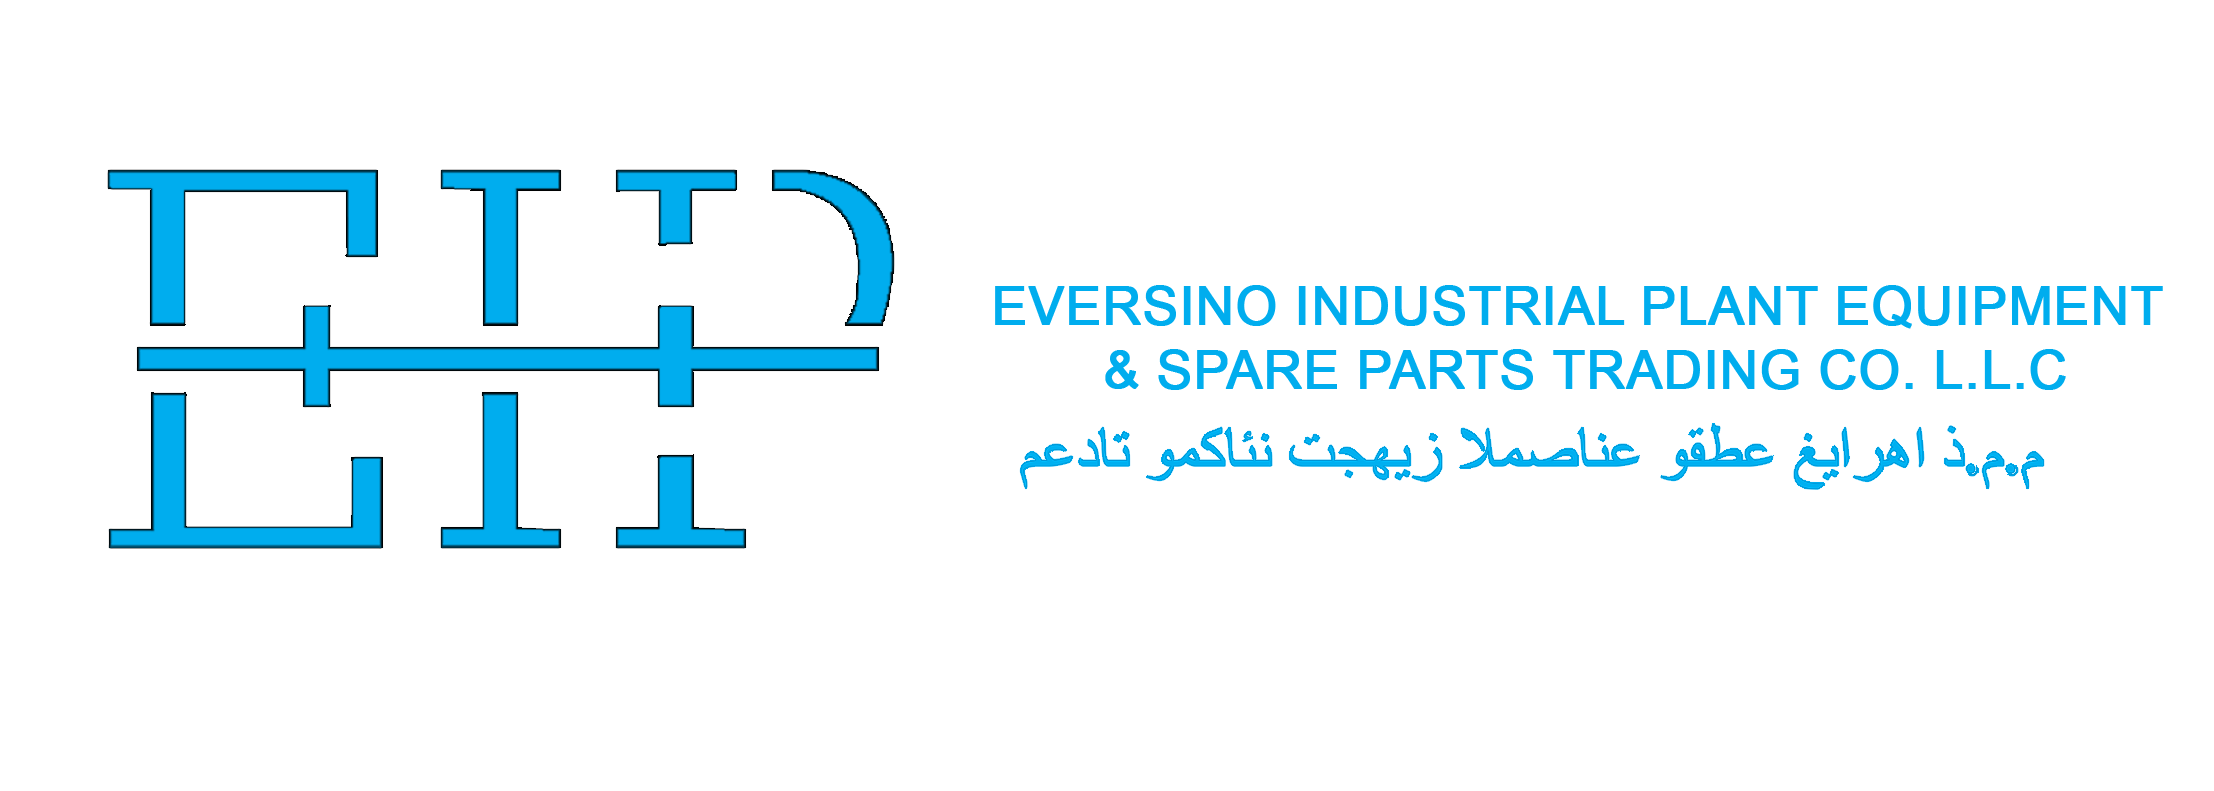 EverSino Industrial Plant Equipment's & Spare Parts LLC